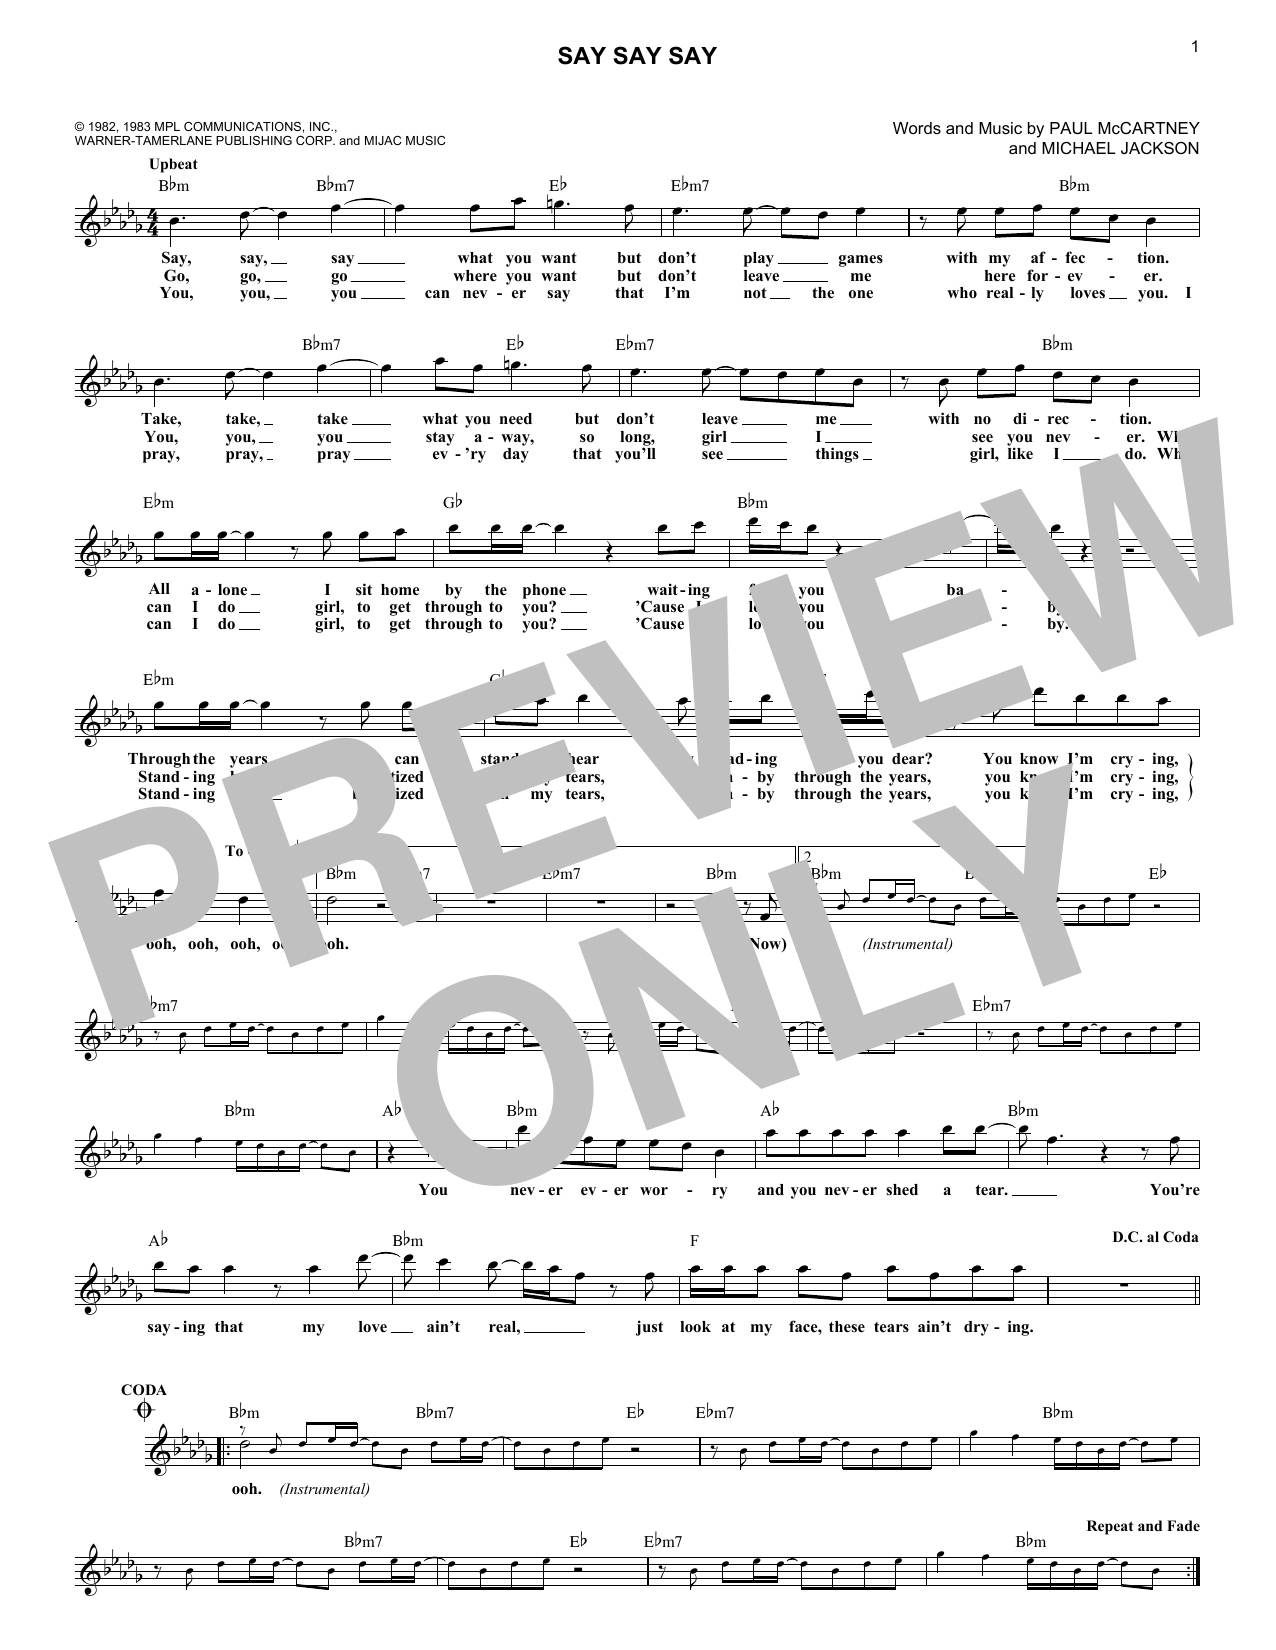 Paul McCartney & Michael Jackson Say Say Say sheet music notes and chords arranged for Guitar Chords/Lyrics